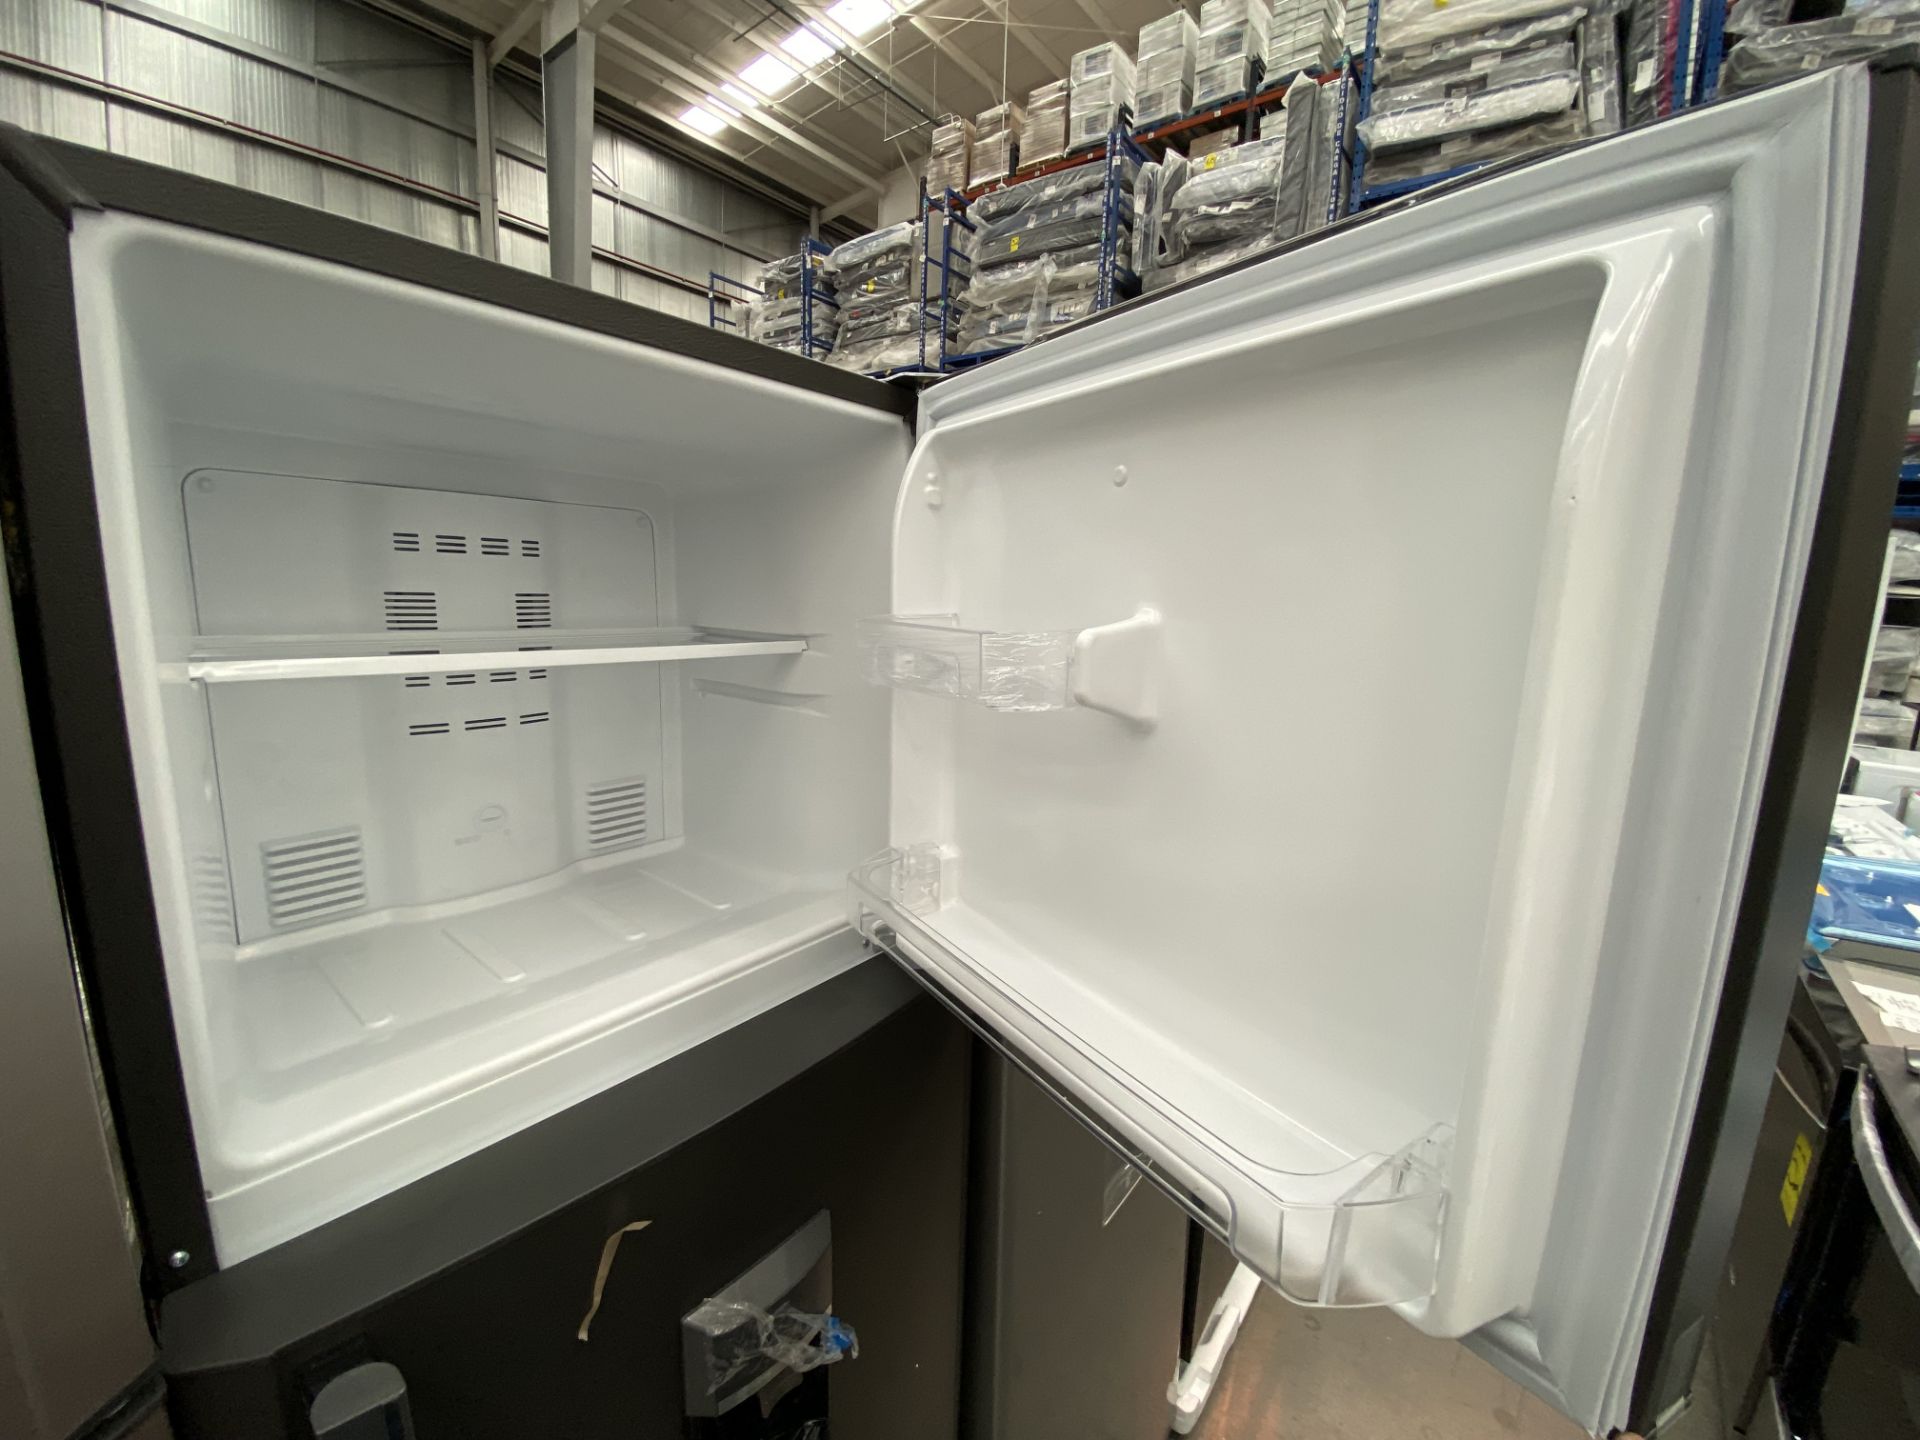 Lote de 1 Refrigerador con dispensador de Agua, Marca Mabe, Modelo RMA300FJMR, Serie 2204B704727, C - Image 7 of 13